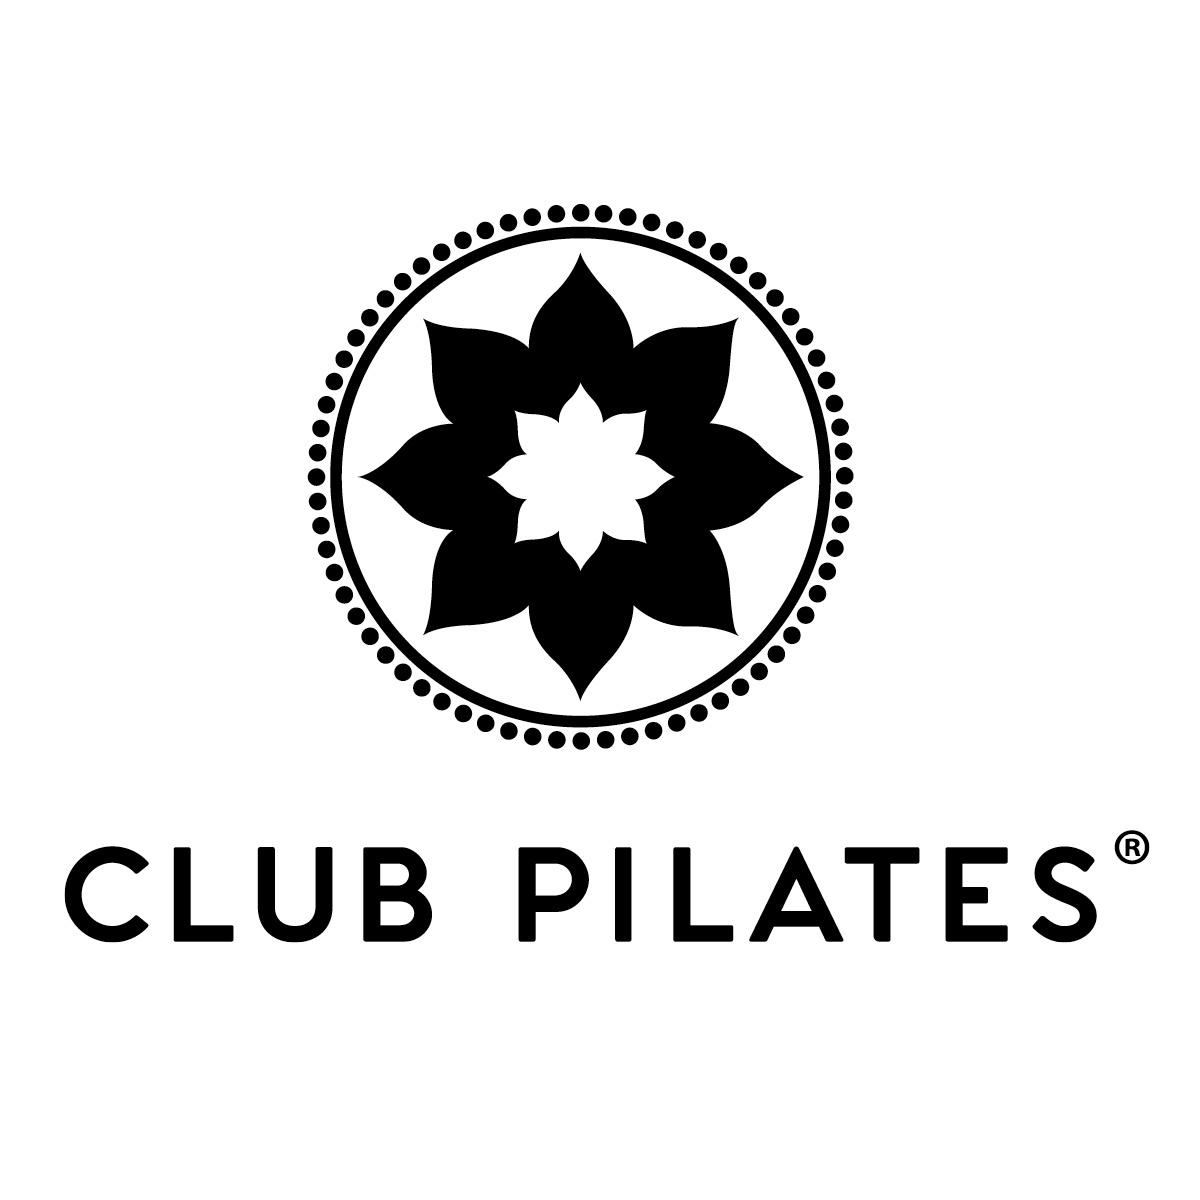 Club Pilates 525 Cedar Hill Ave, Wyckoff New Jersey 07481